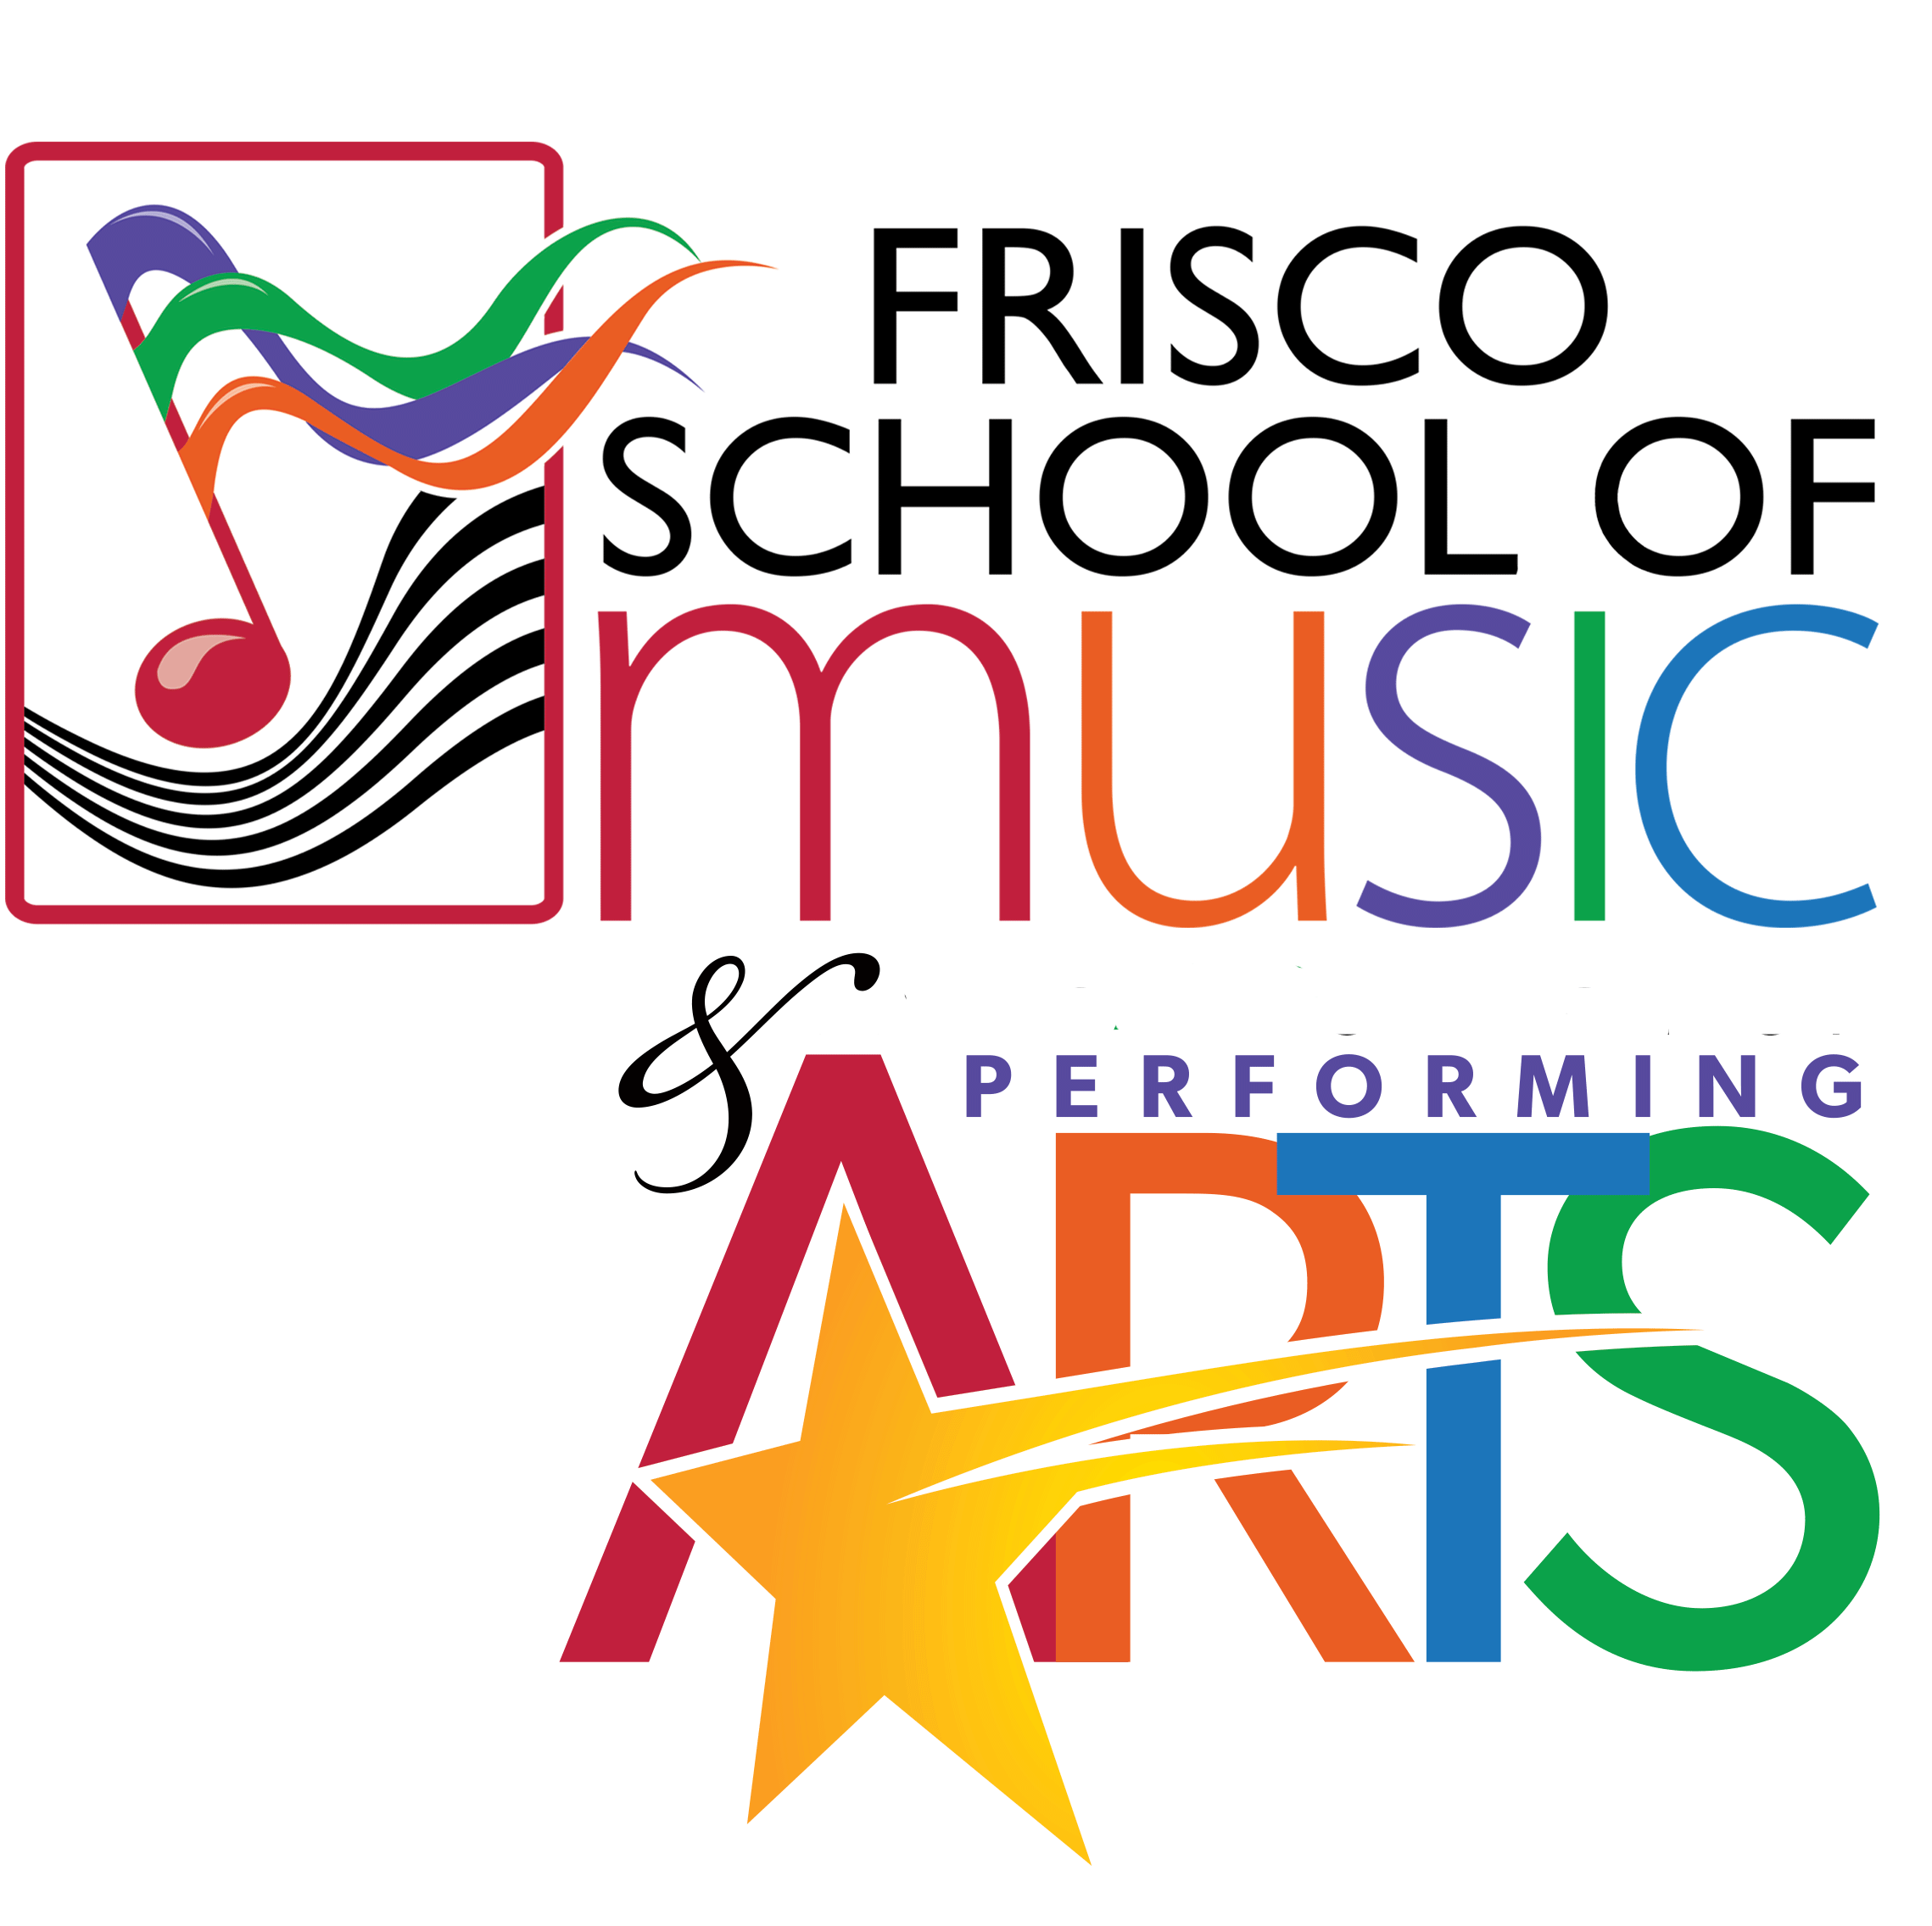 Frisco School of Music & Performing Arts